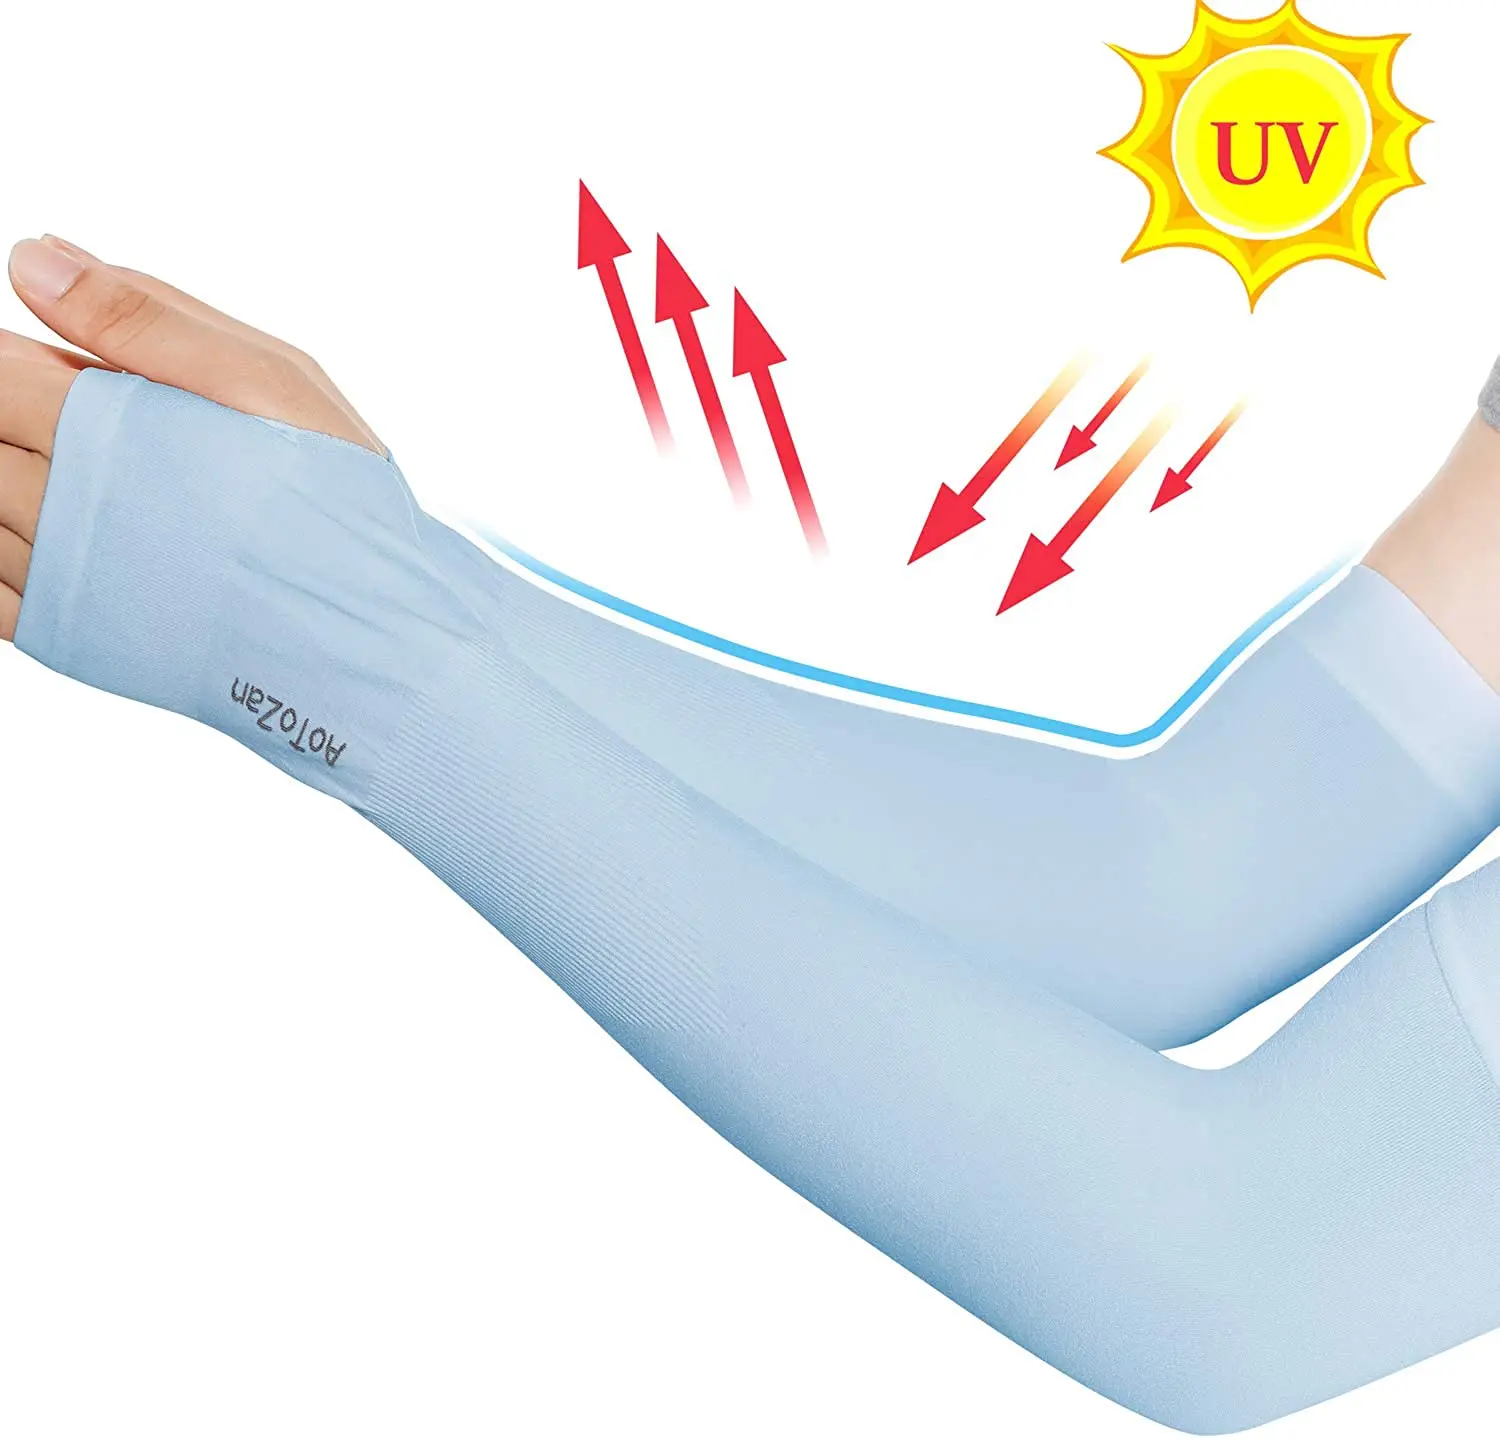 Unisex การบีบอัด Cooling UV ป้องกันดวงอาทิตย์แขนยาวแขน Anti-Slip อุ่นสำหรับกีฬากลางแจ้ง Sunblock Tattoo